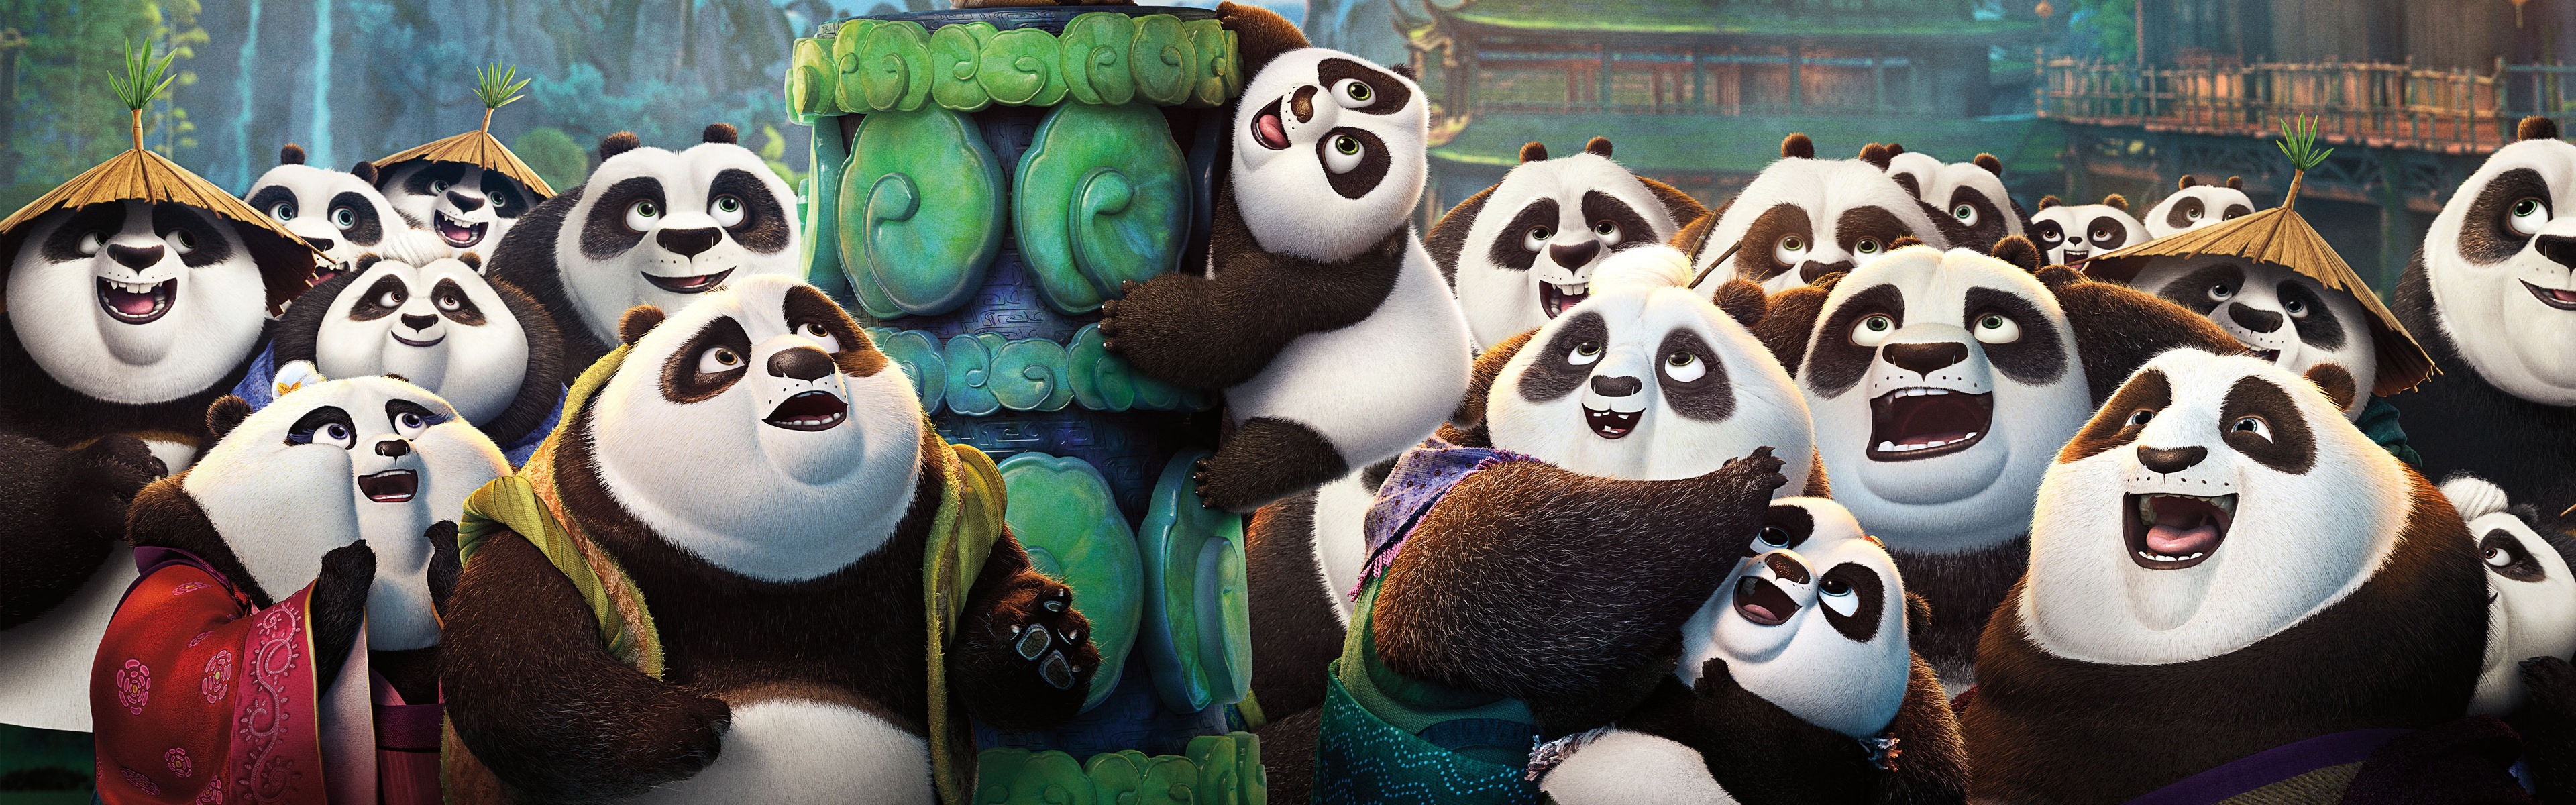 Kung Fu Panda 3, fondos de pantalla de alta definición de películas #7 - 3840x1200